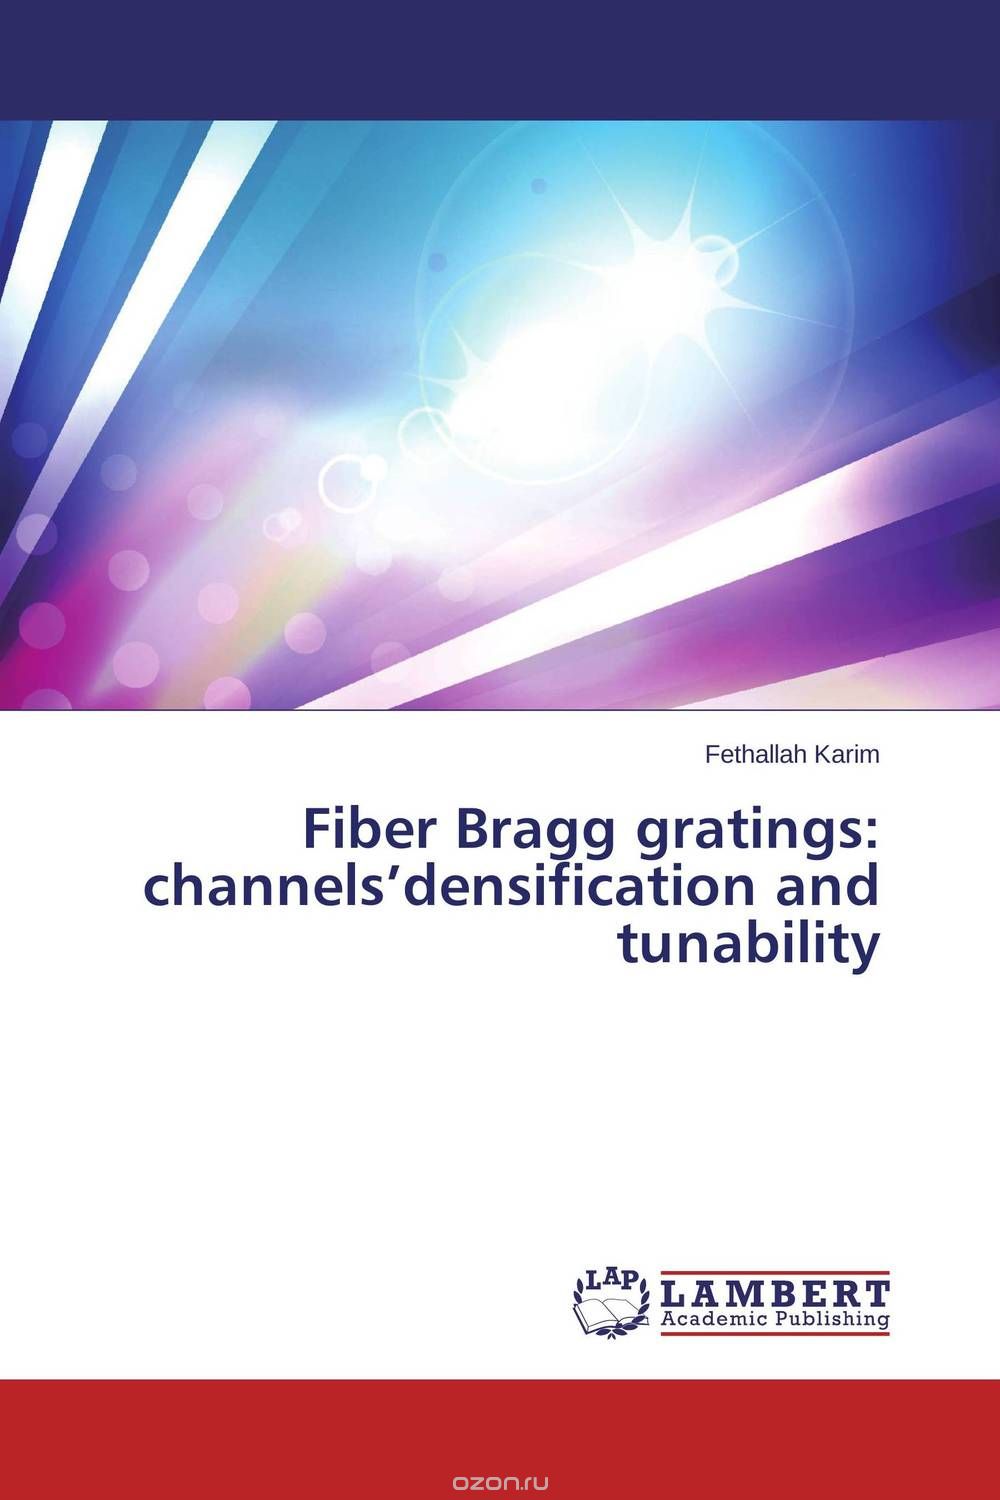 Скачать книгу "Fiber Bragg gratings: channels’densification and tunability"